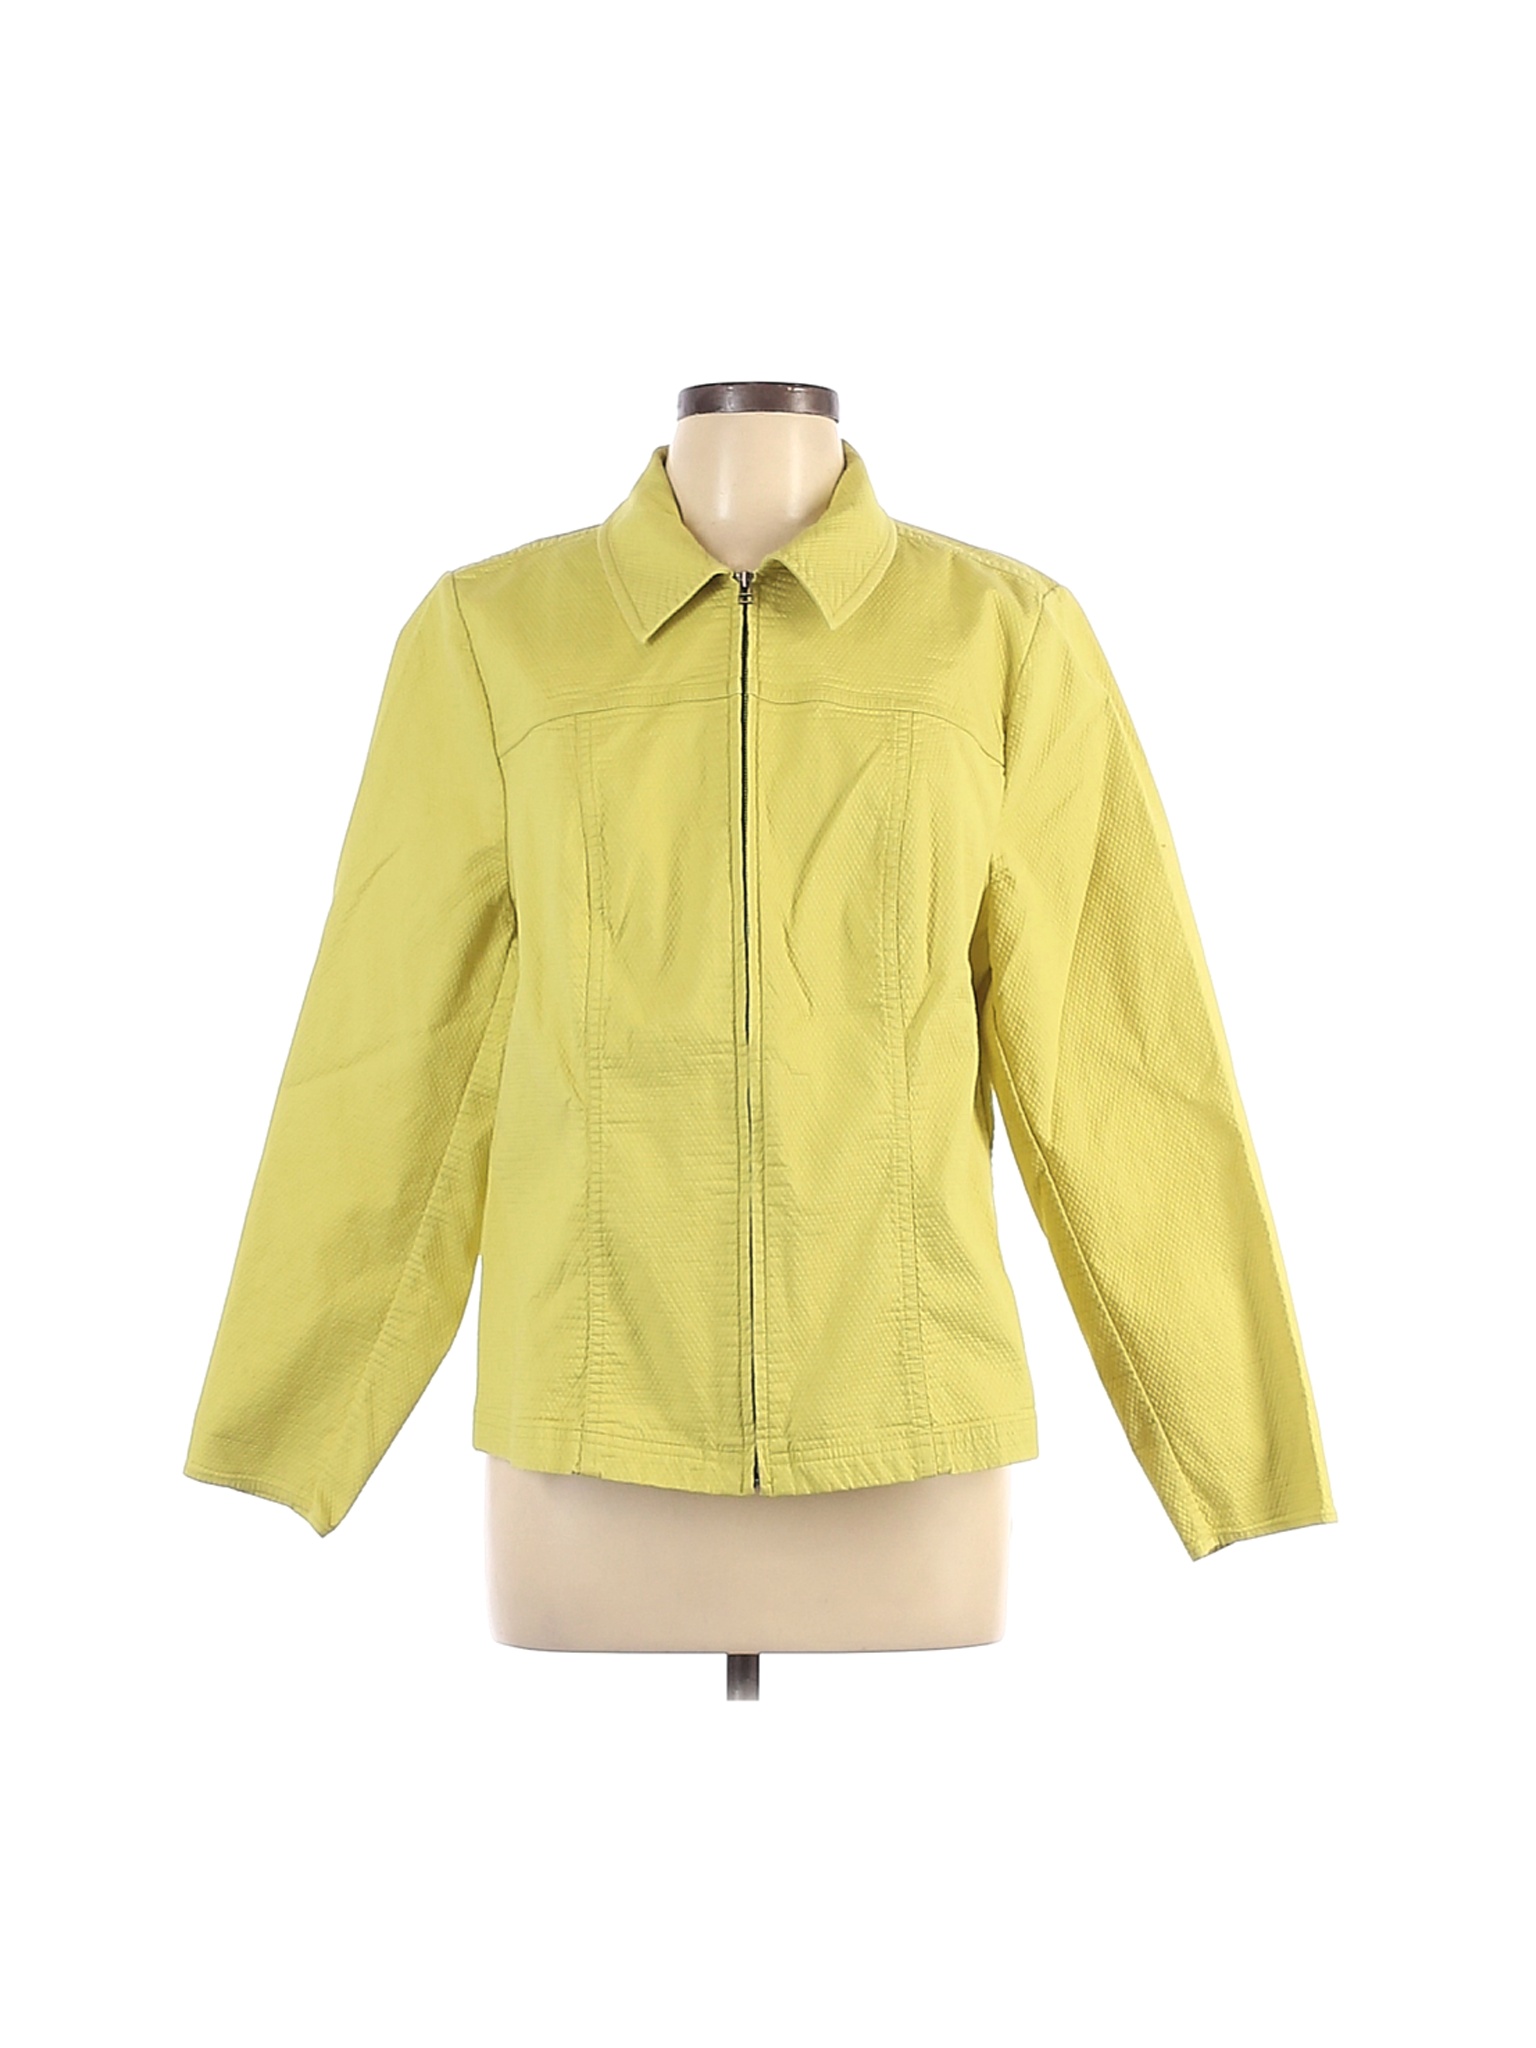 Cj Banks Women Yellow Jacket 10 | eBay